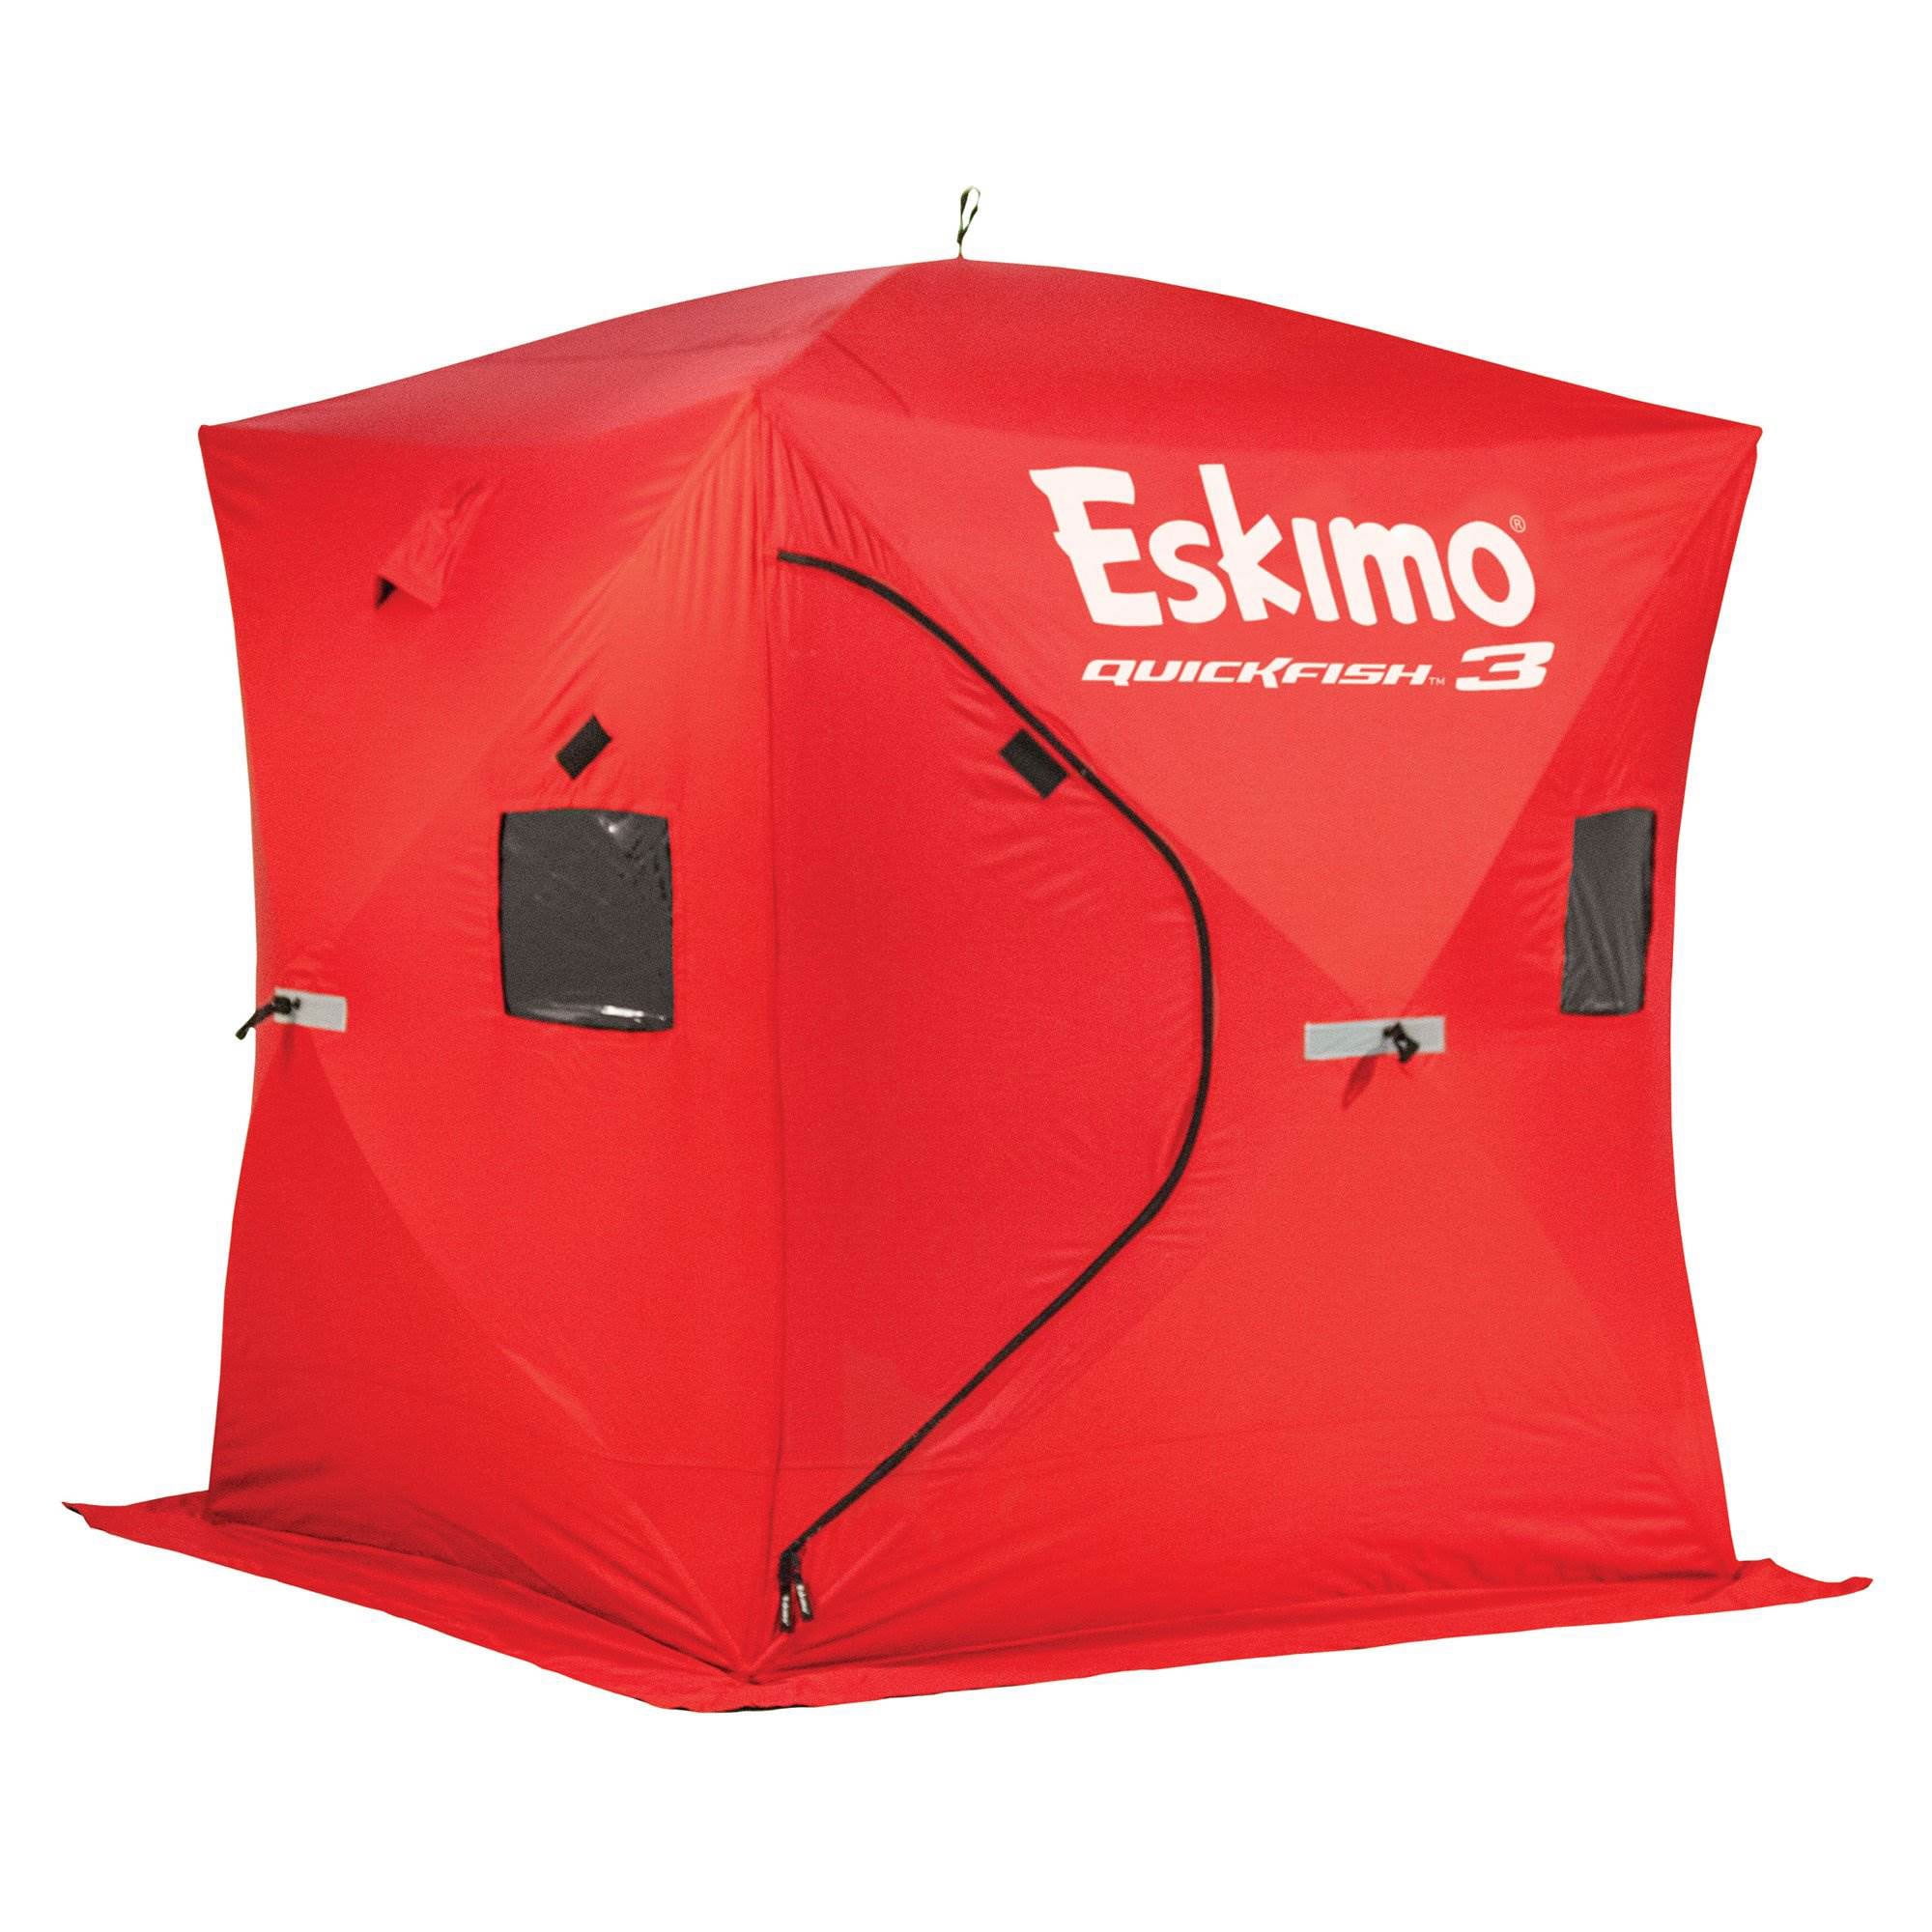 Eskimo Canopies & Shelters